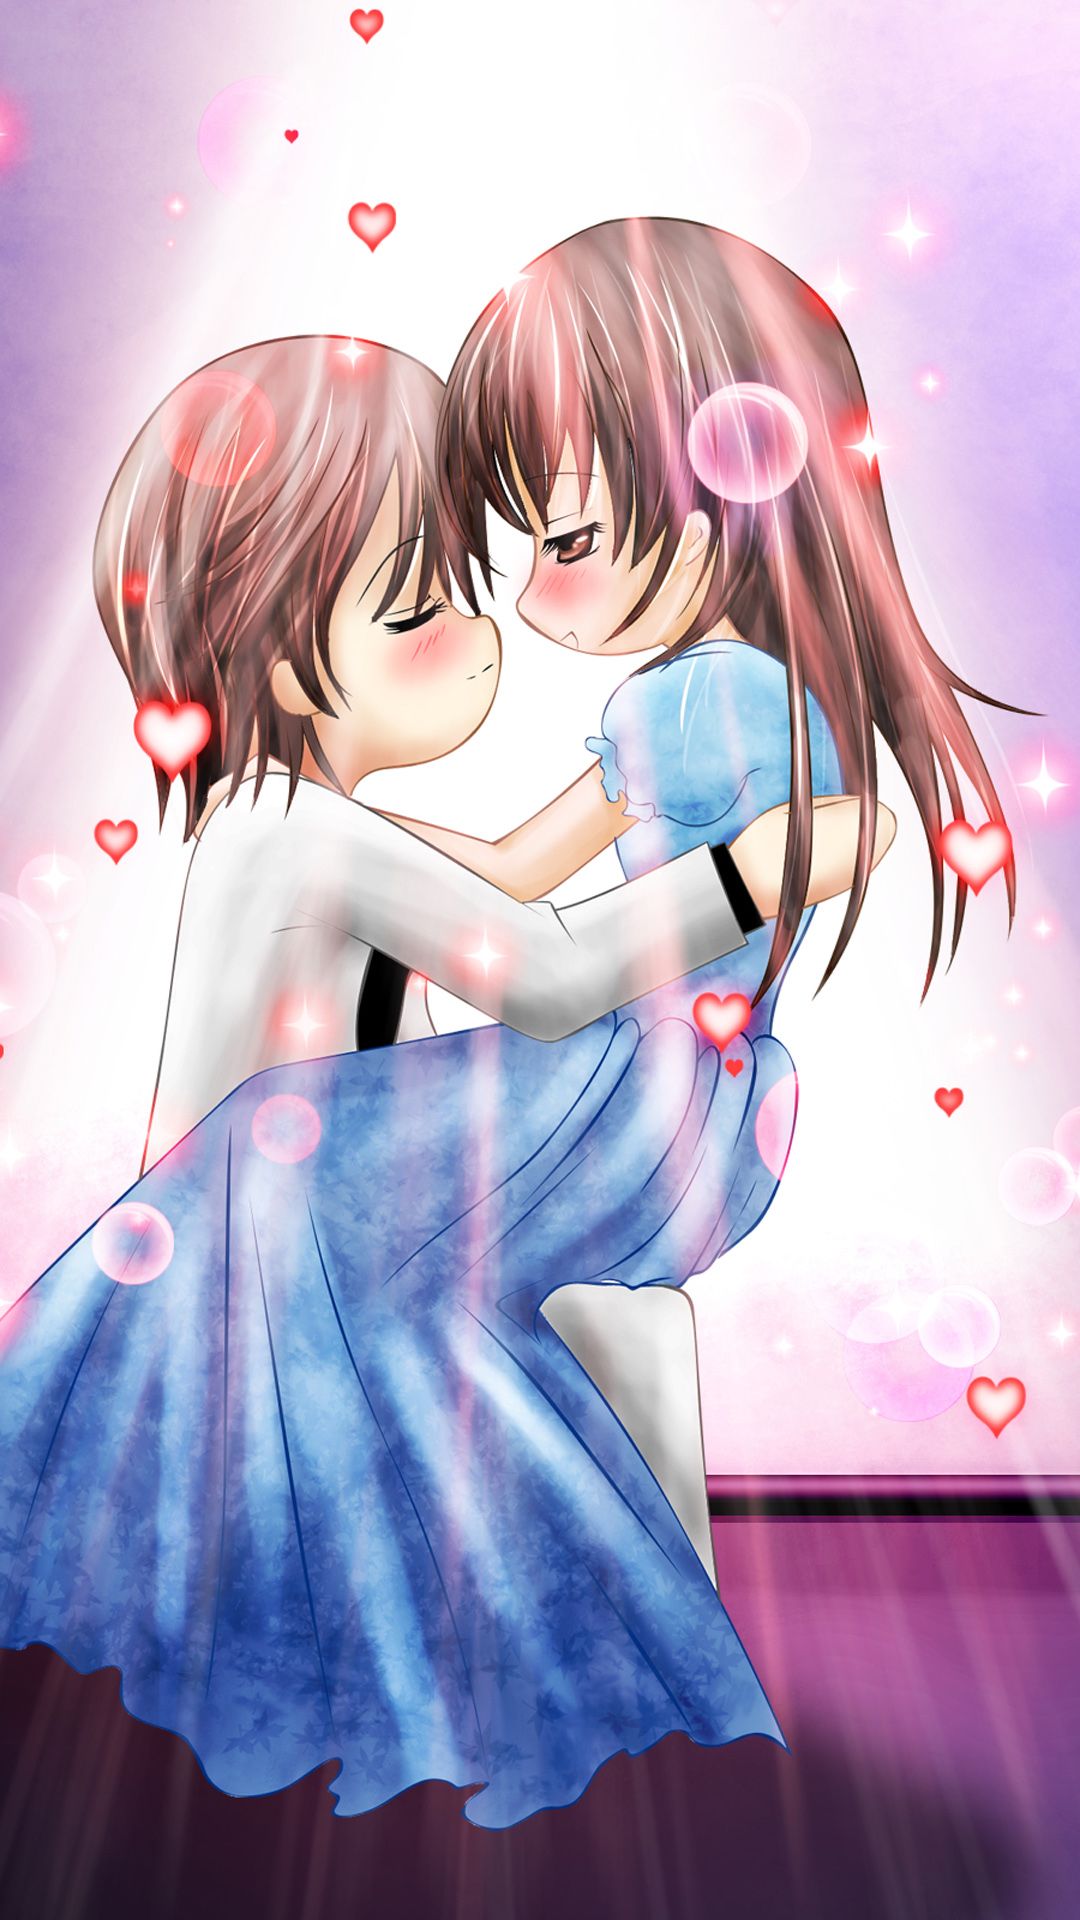 Anime Couple Hugging Wallpaper. kumpulan materi pelajaran dan